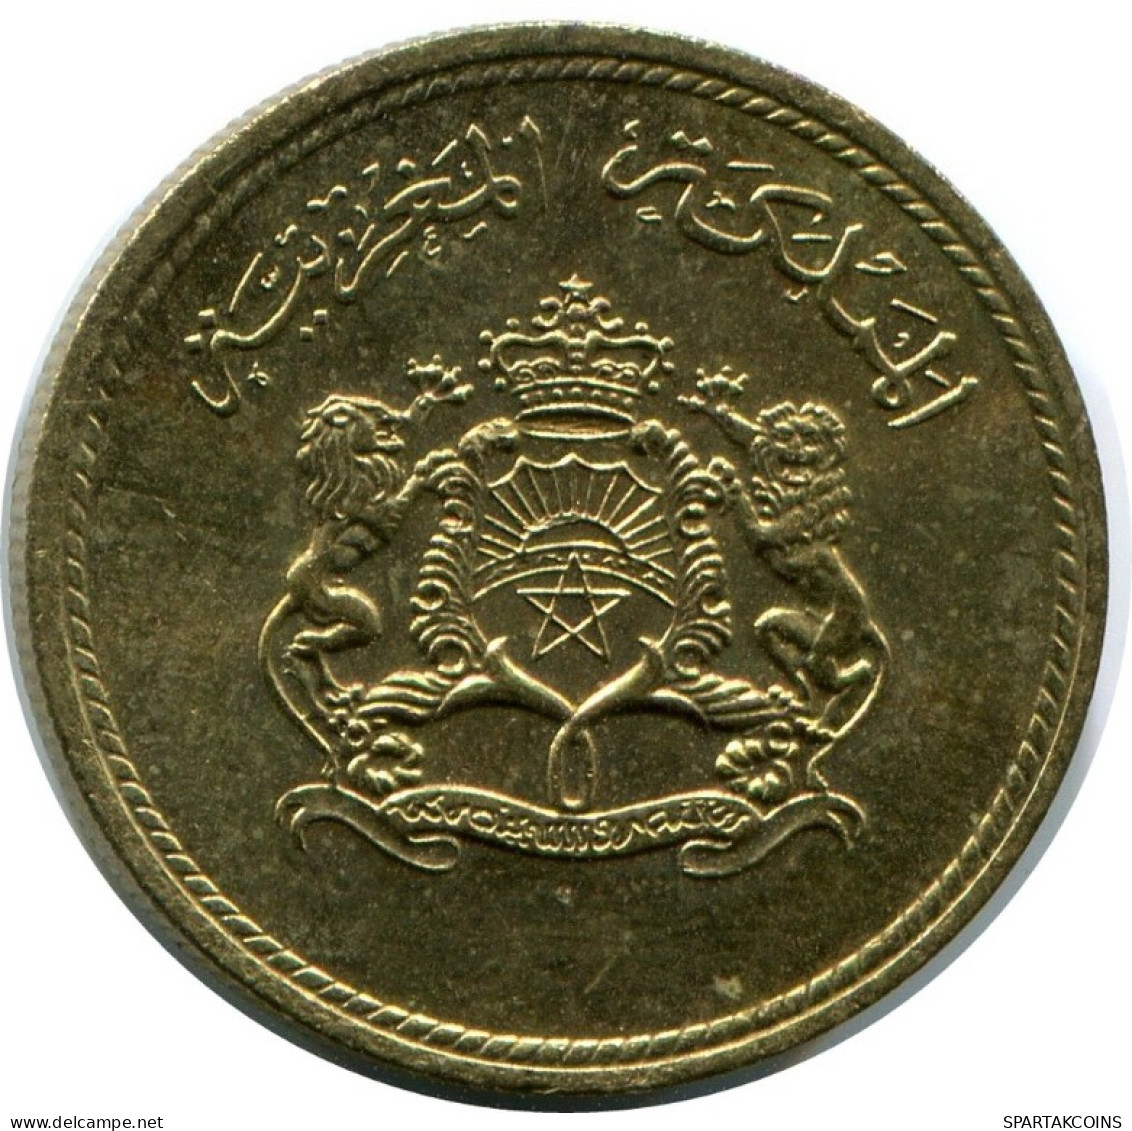 10 SANTIMAT / CENTIMES 1974 MOROCCO Islamic Coin #AH673.3.U.A - Morocco